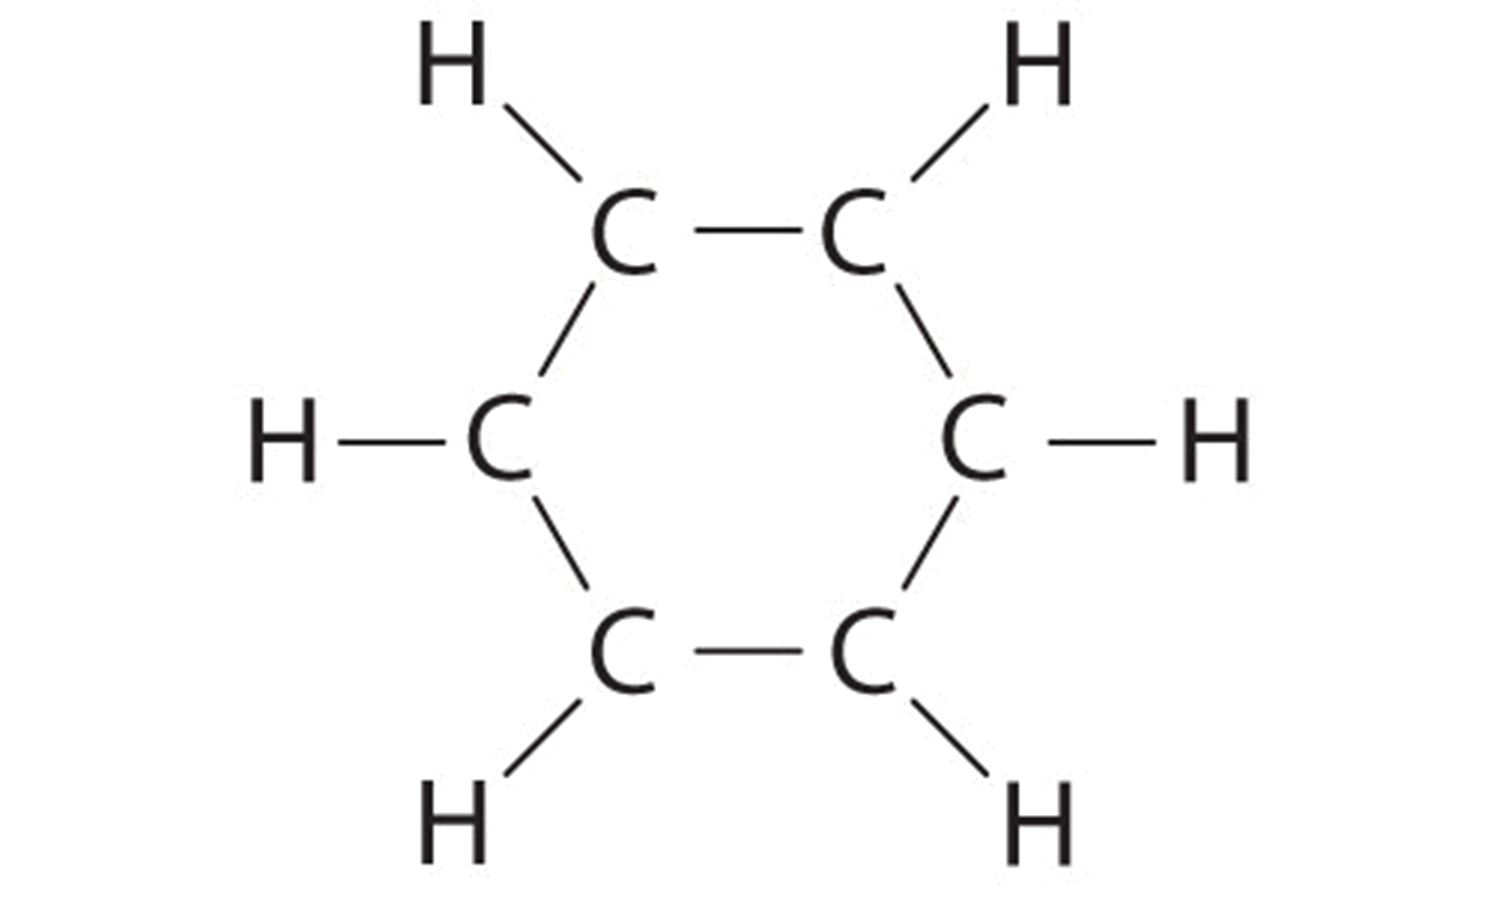 Benzene ring bond line structure.